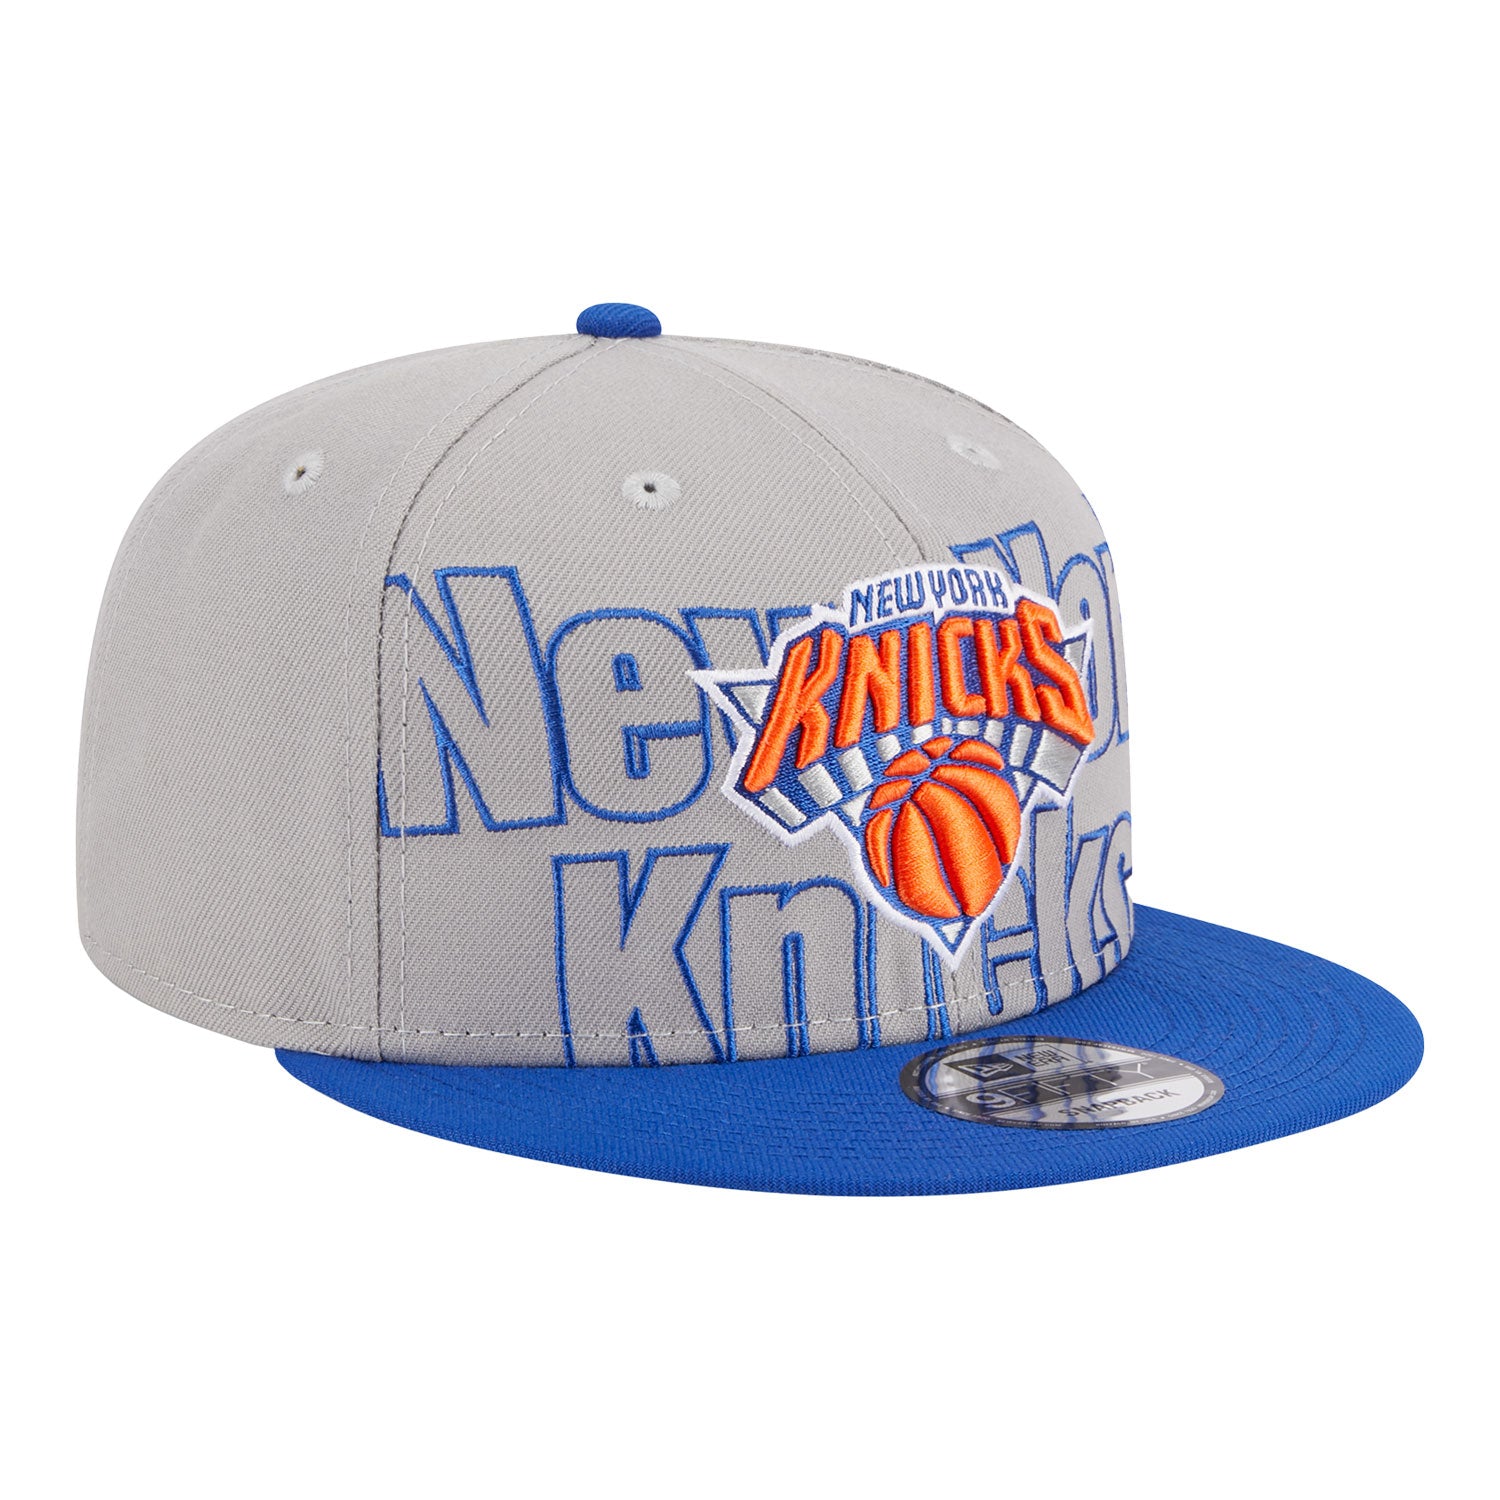 New Era Knicks Back Letter 950 Snapback Hat